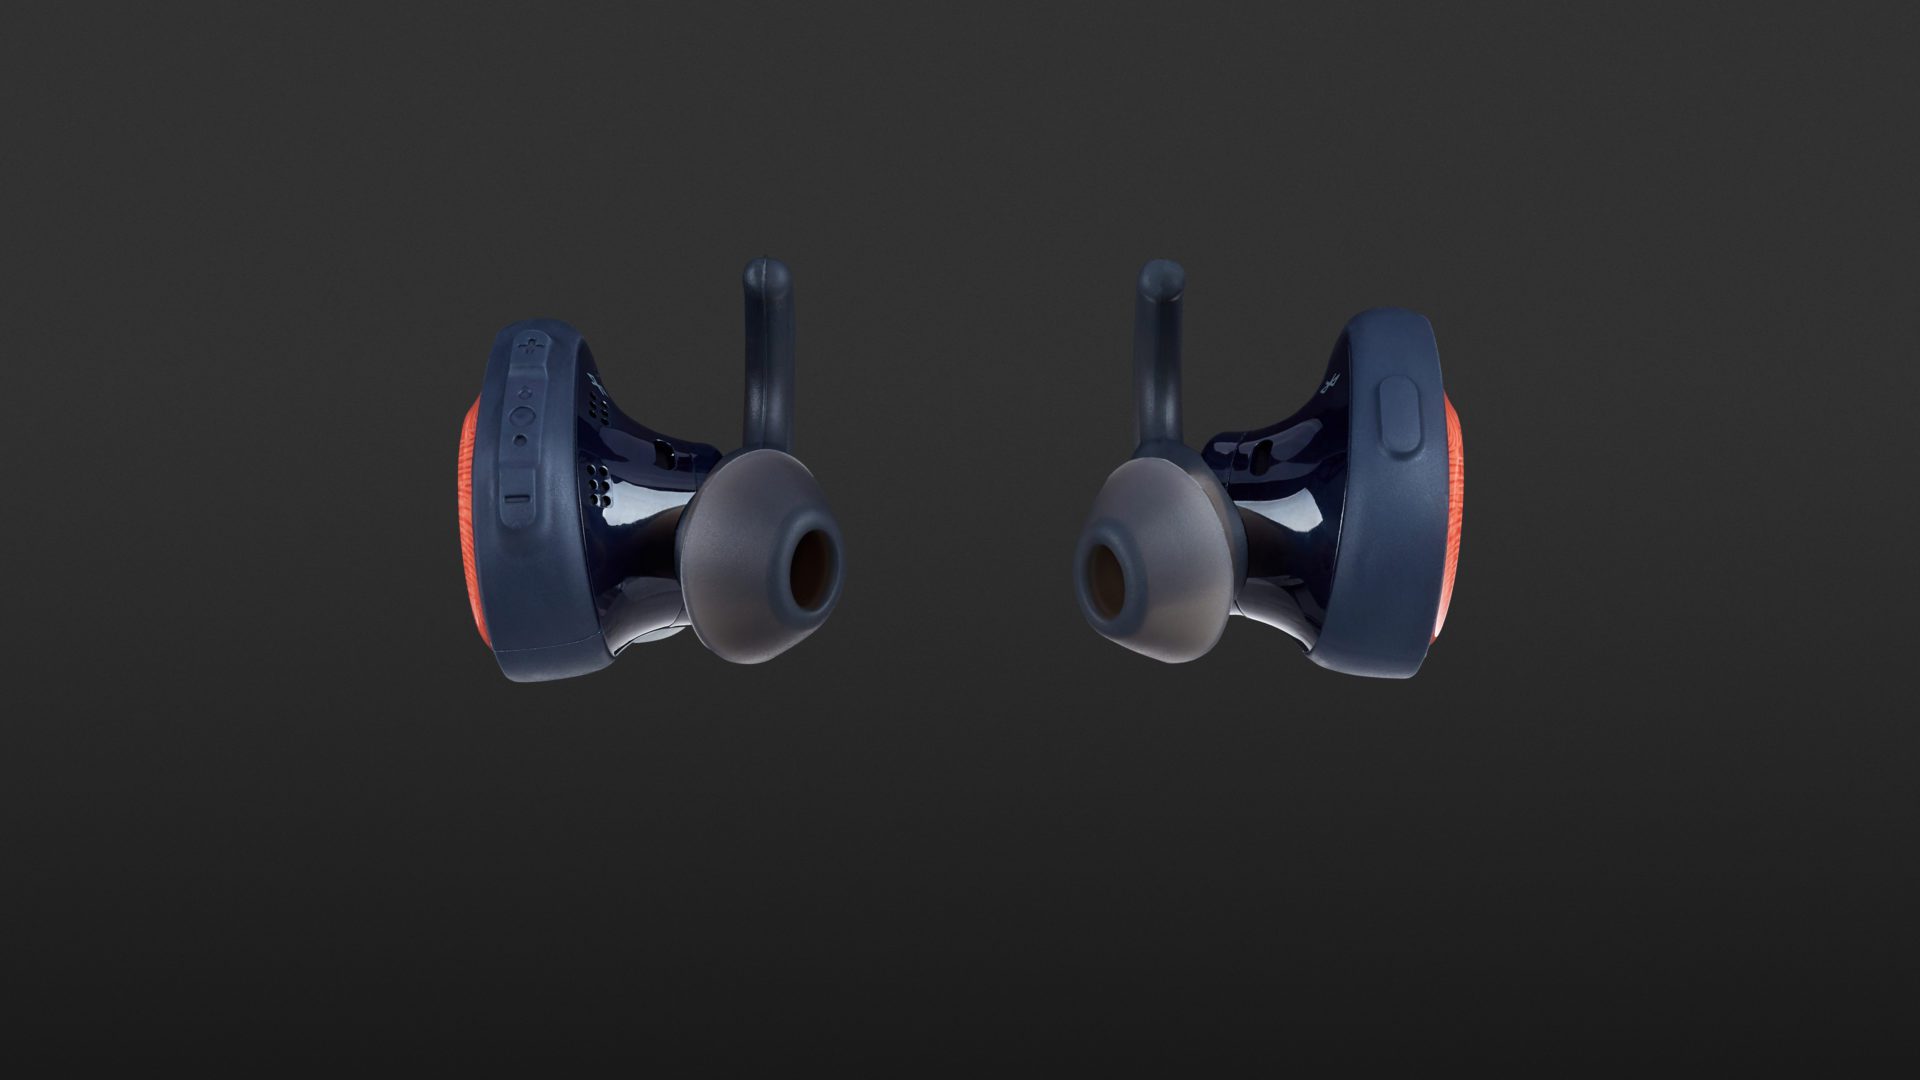 Bose SoundSport Free Wireless Headphones in Ear Earbuds with